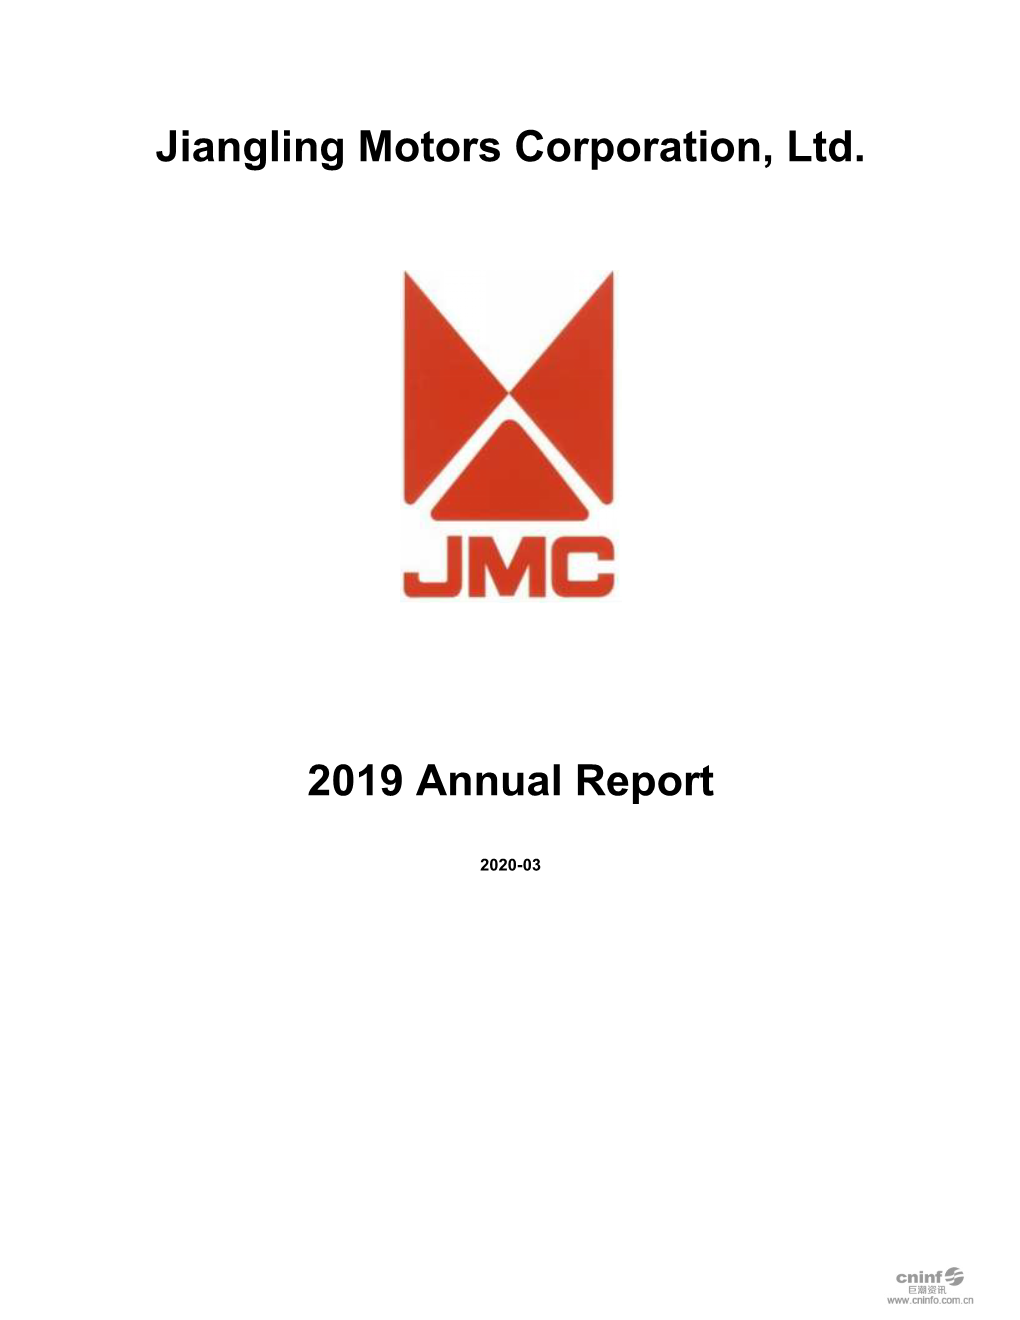 Jiangling Motors Corporation, Ltd. 2019 Annual Report